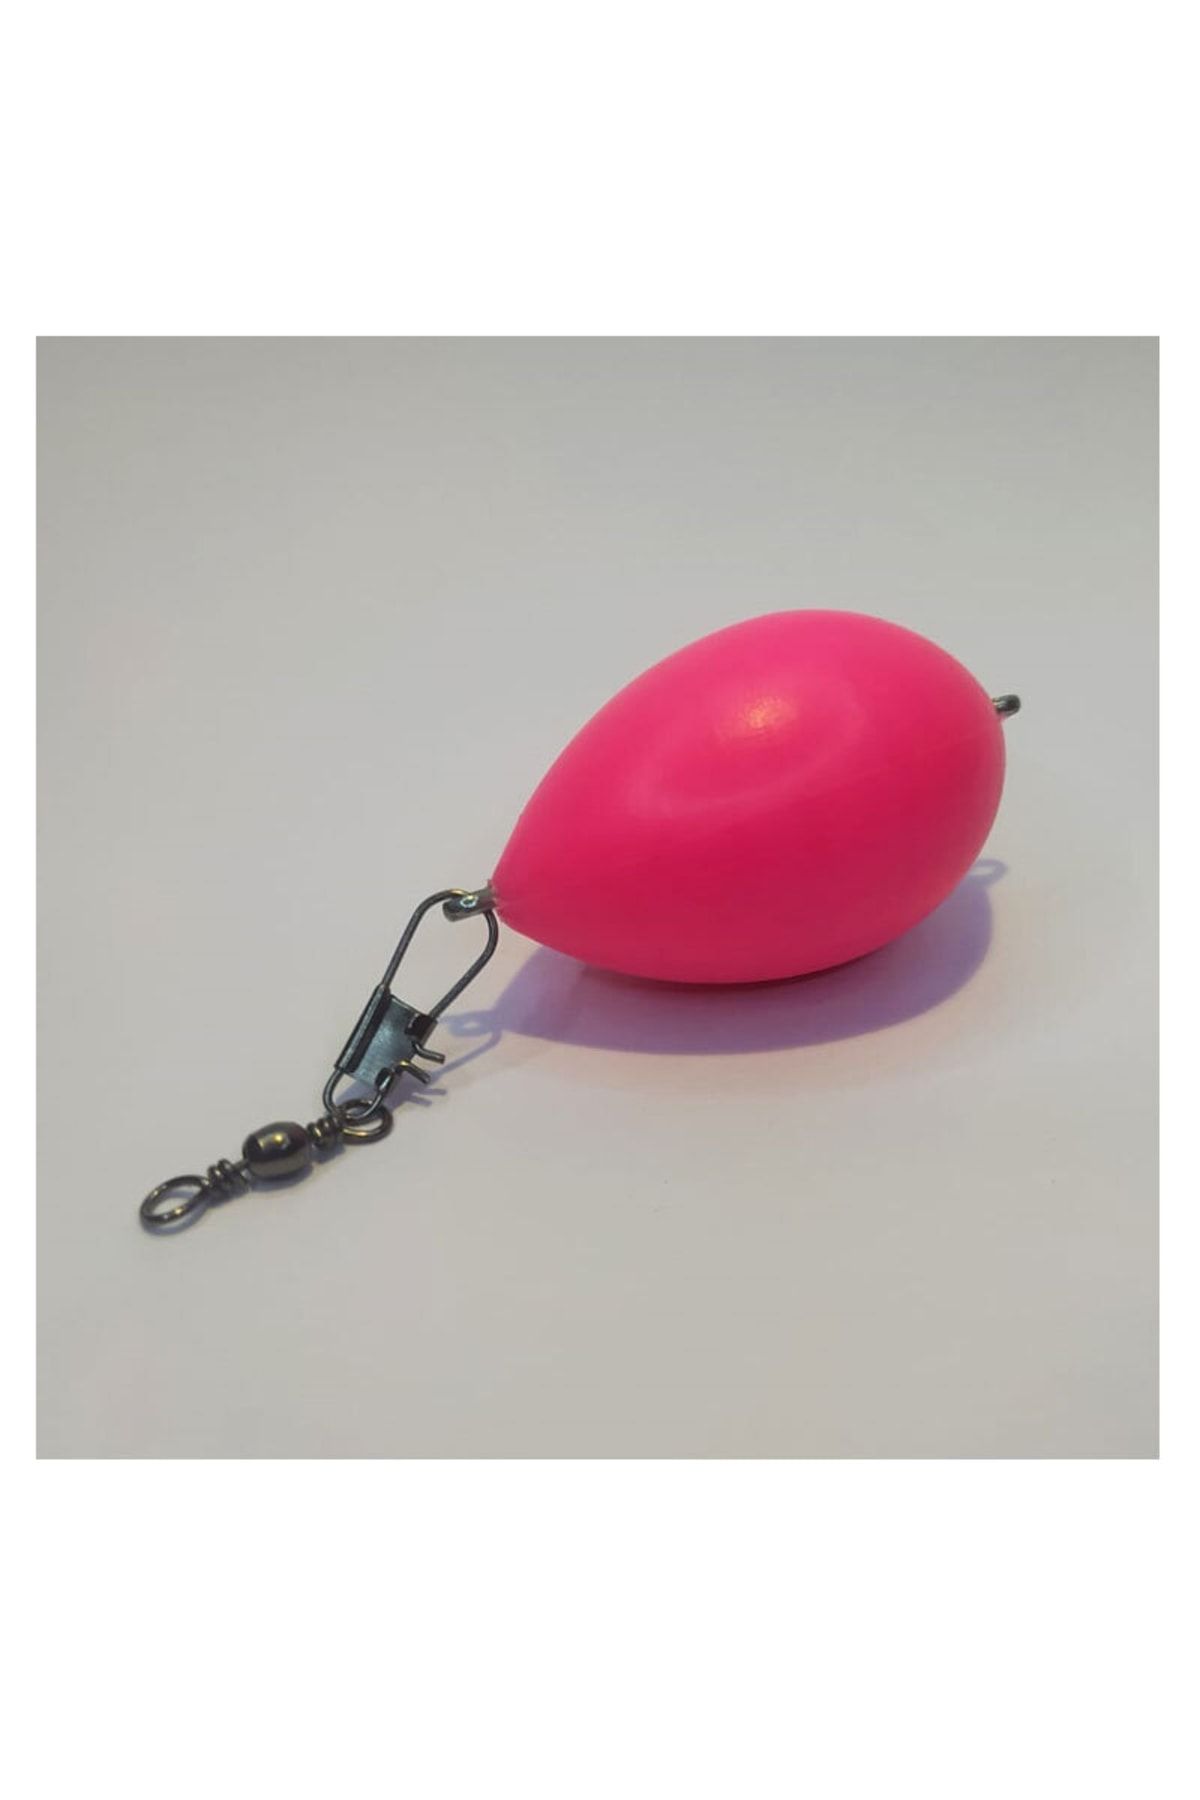 ALDOS Bulrag Garfish Ball Fishing Rod Float 50 gr Pink (3 AD